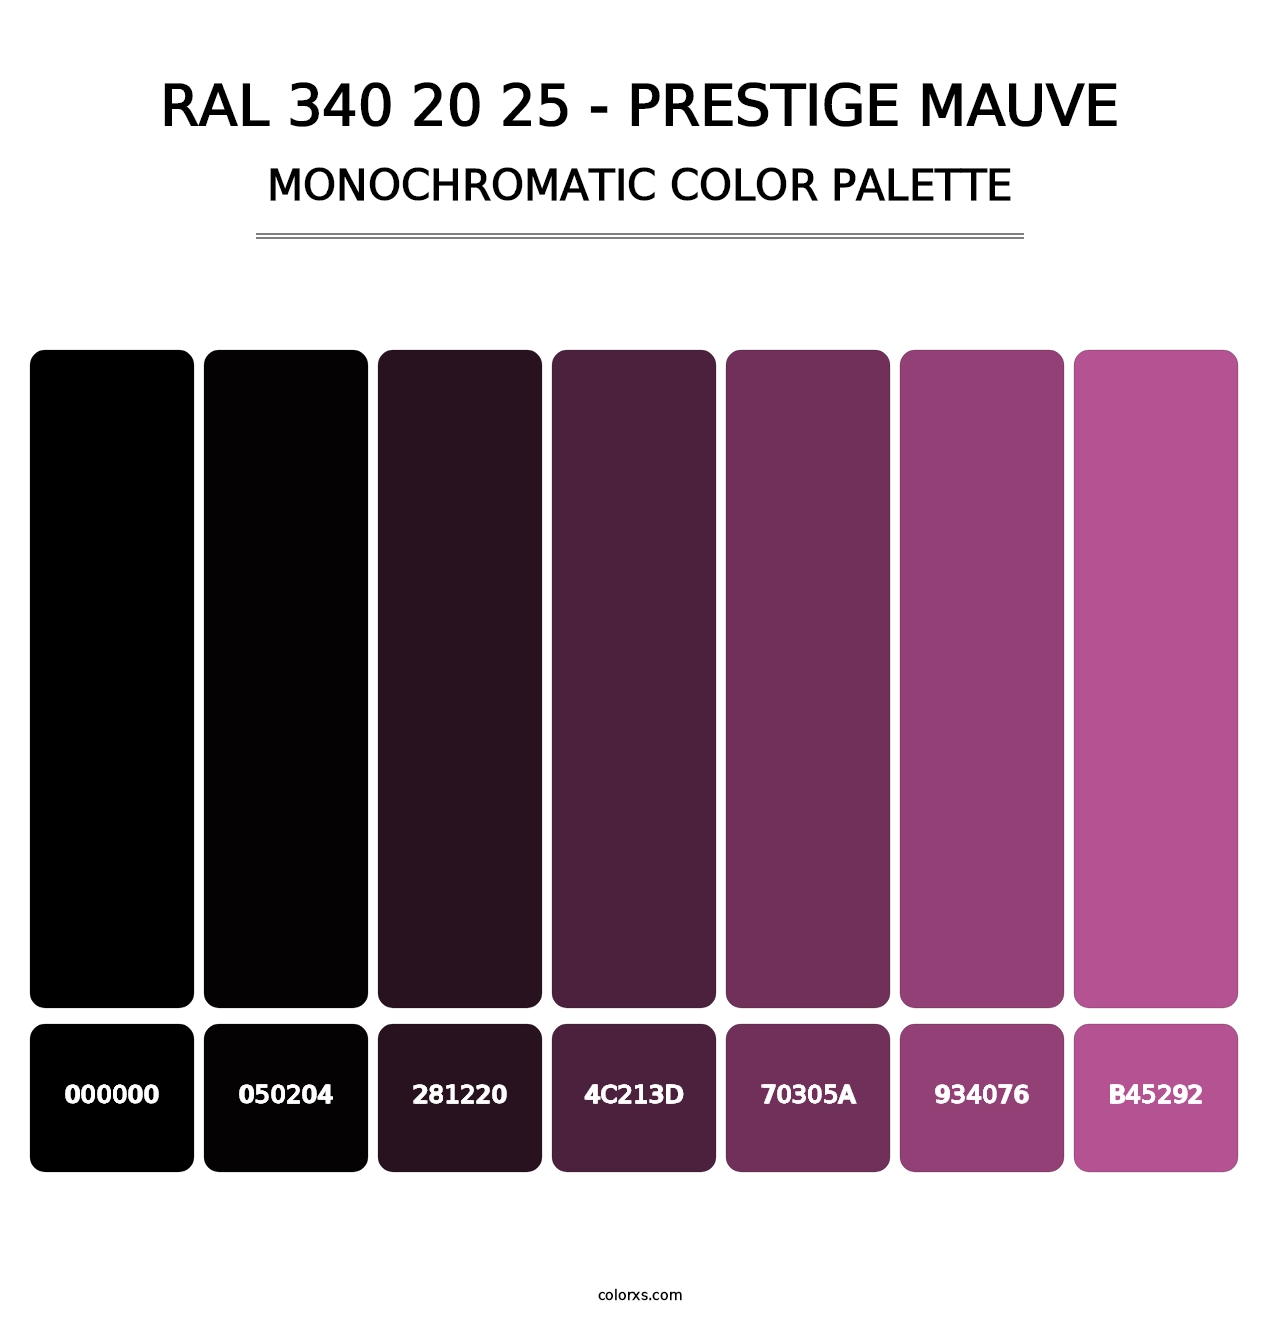 RAL 340 20 25 - Prestige Mauve - Monochromatic Color Palette